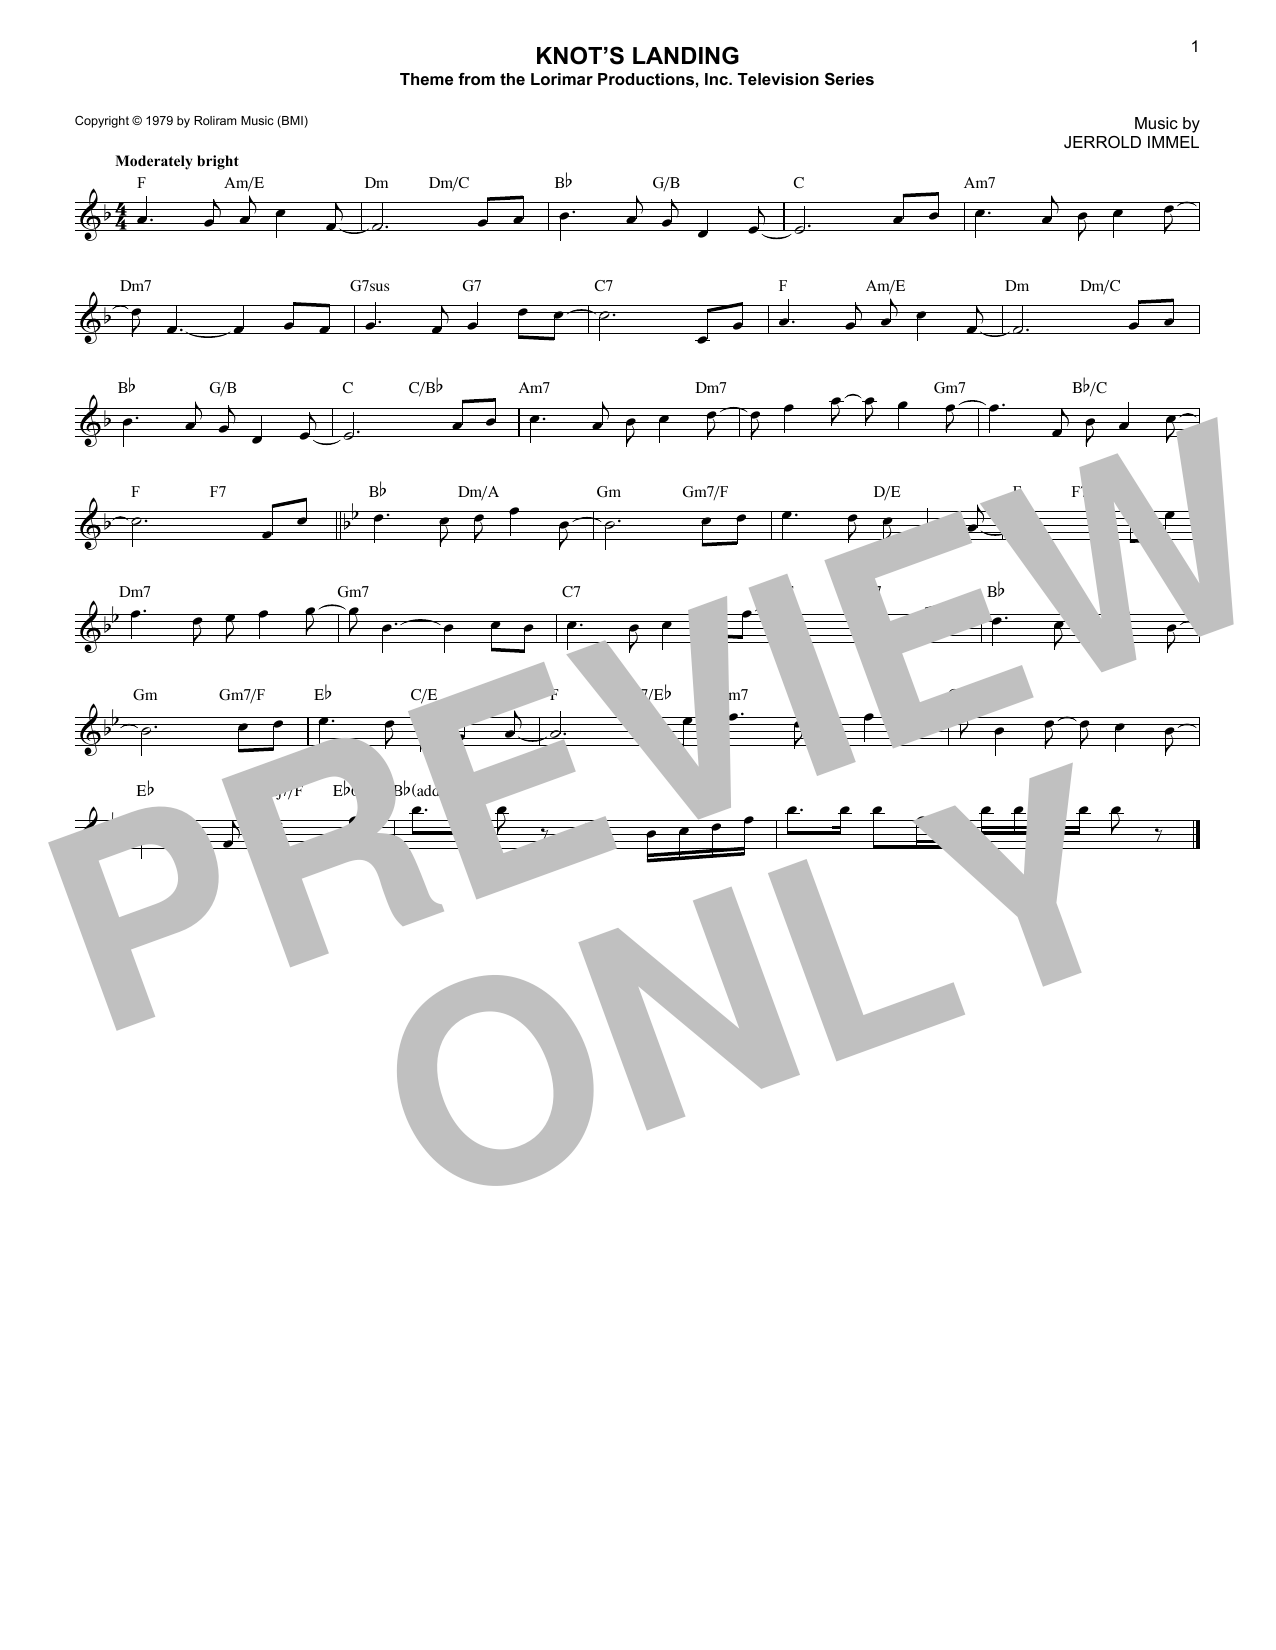 Jerrold Immel Knot's Landing Sheet Music Notes & Chords for Lead Sheet / Fake Book - Download or Print PDF